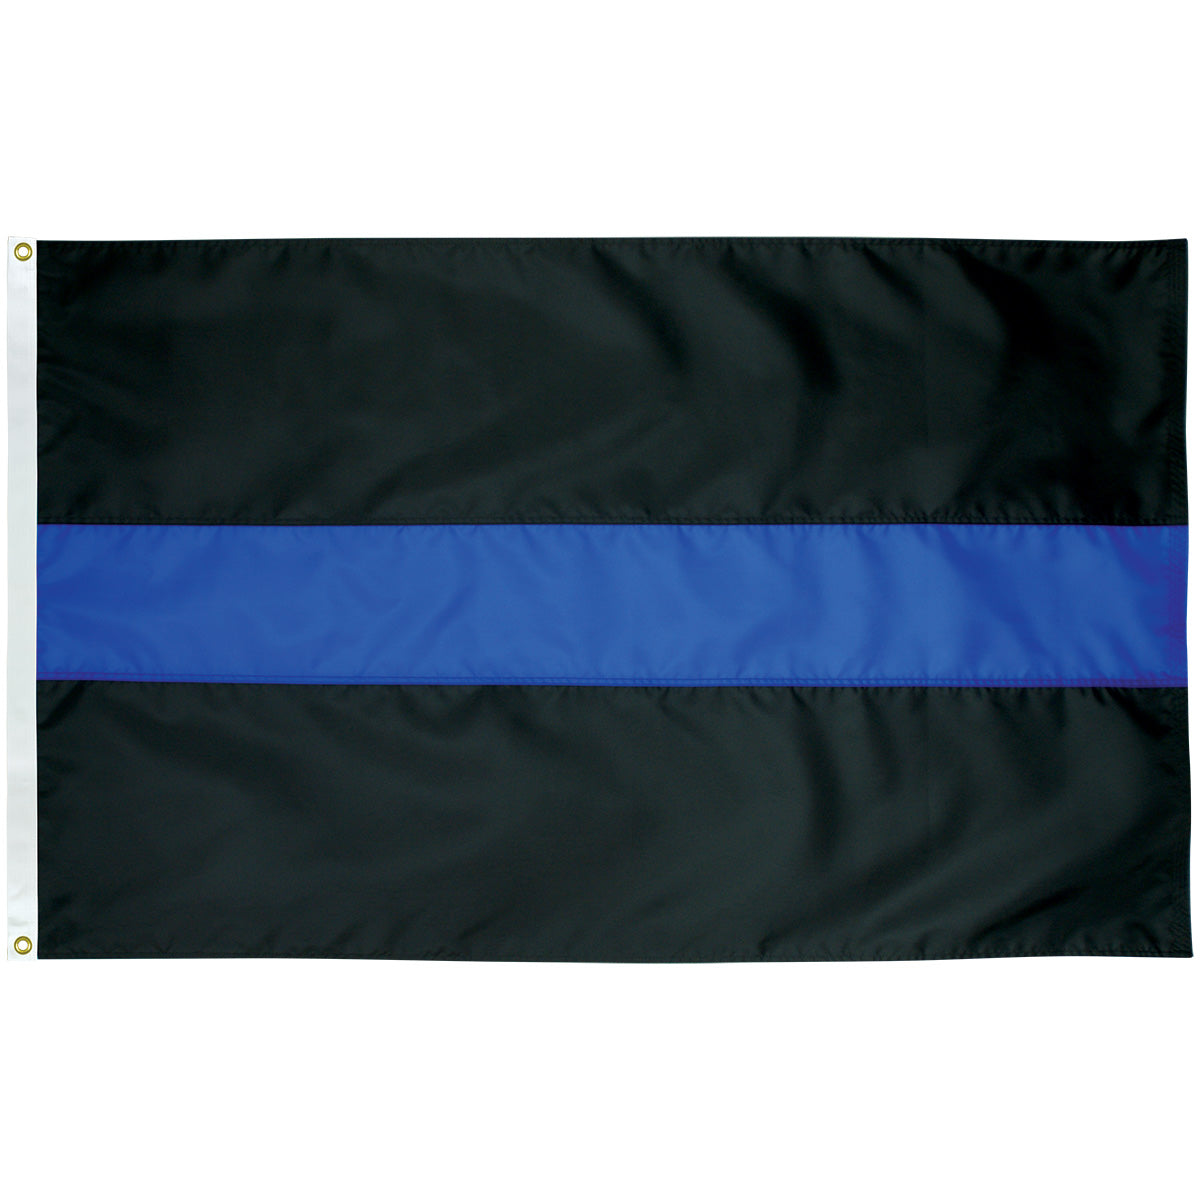 Thin Blue Line Flag AKA Police / Law Enforcement Flags